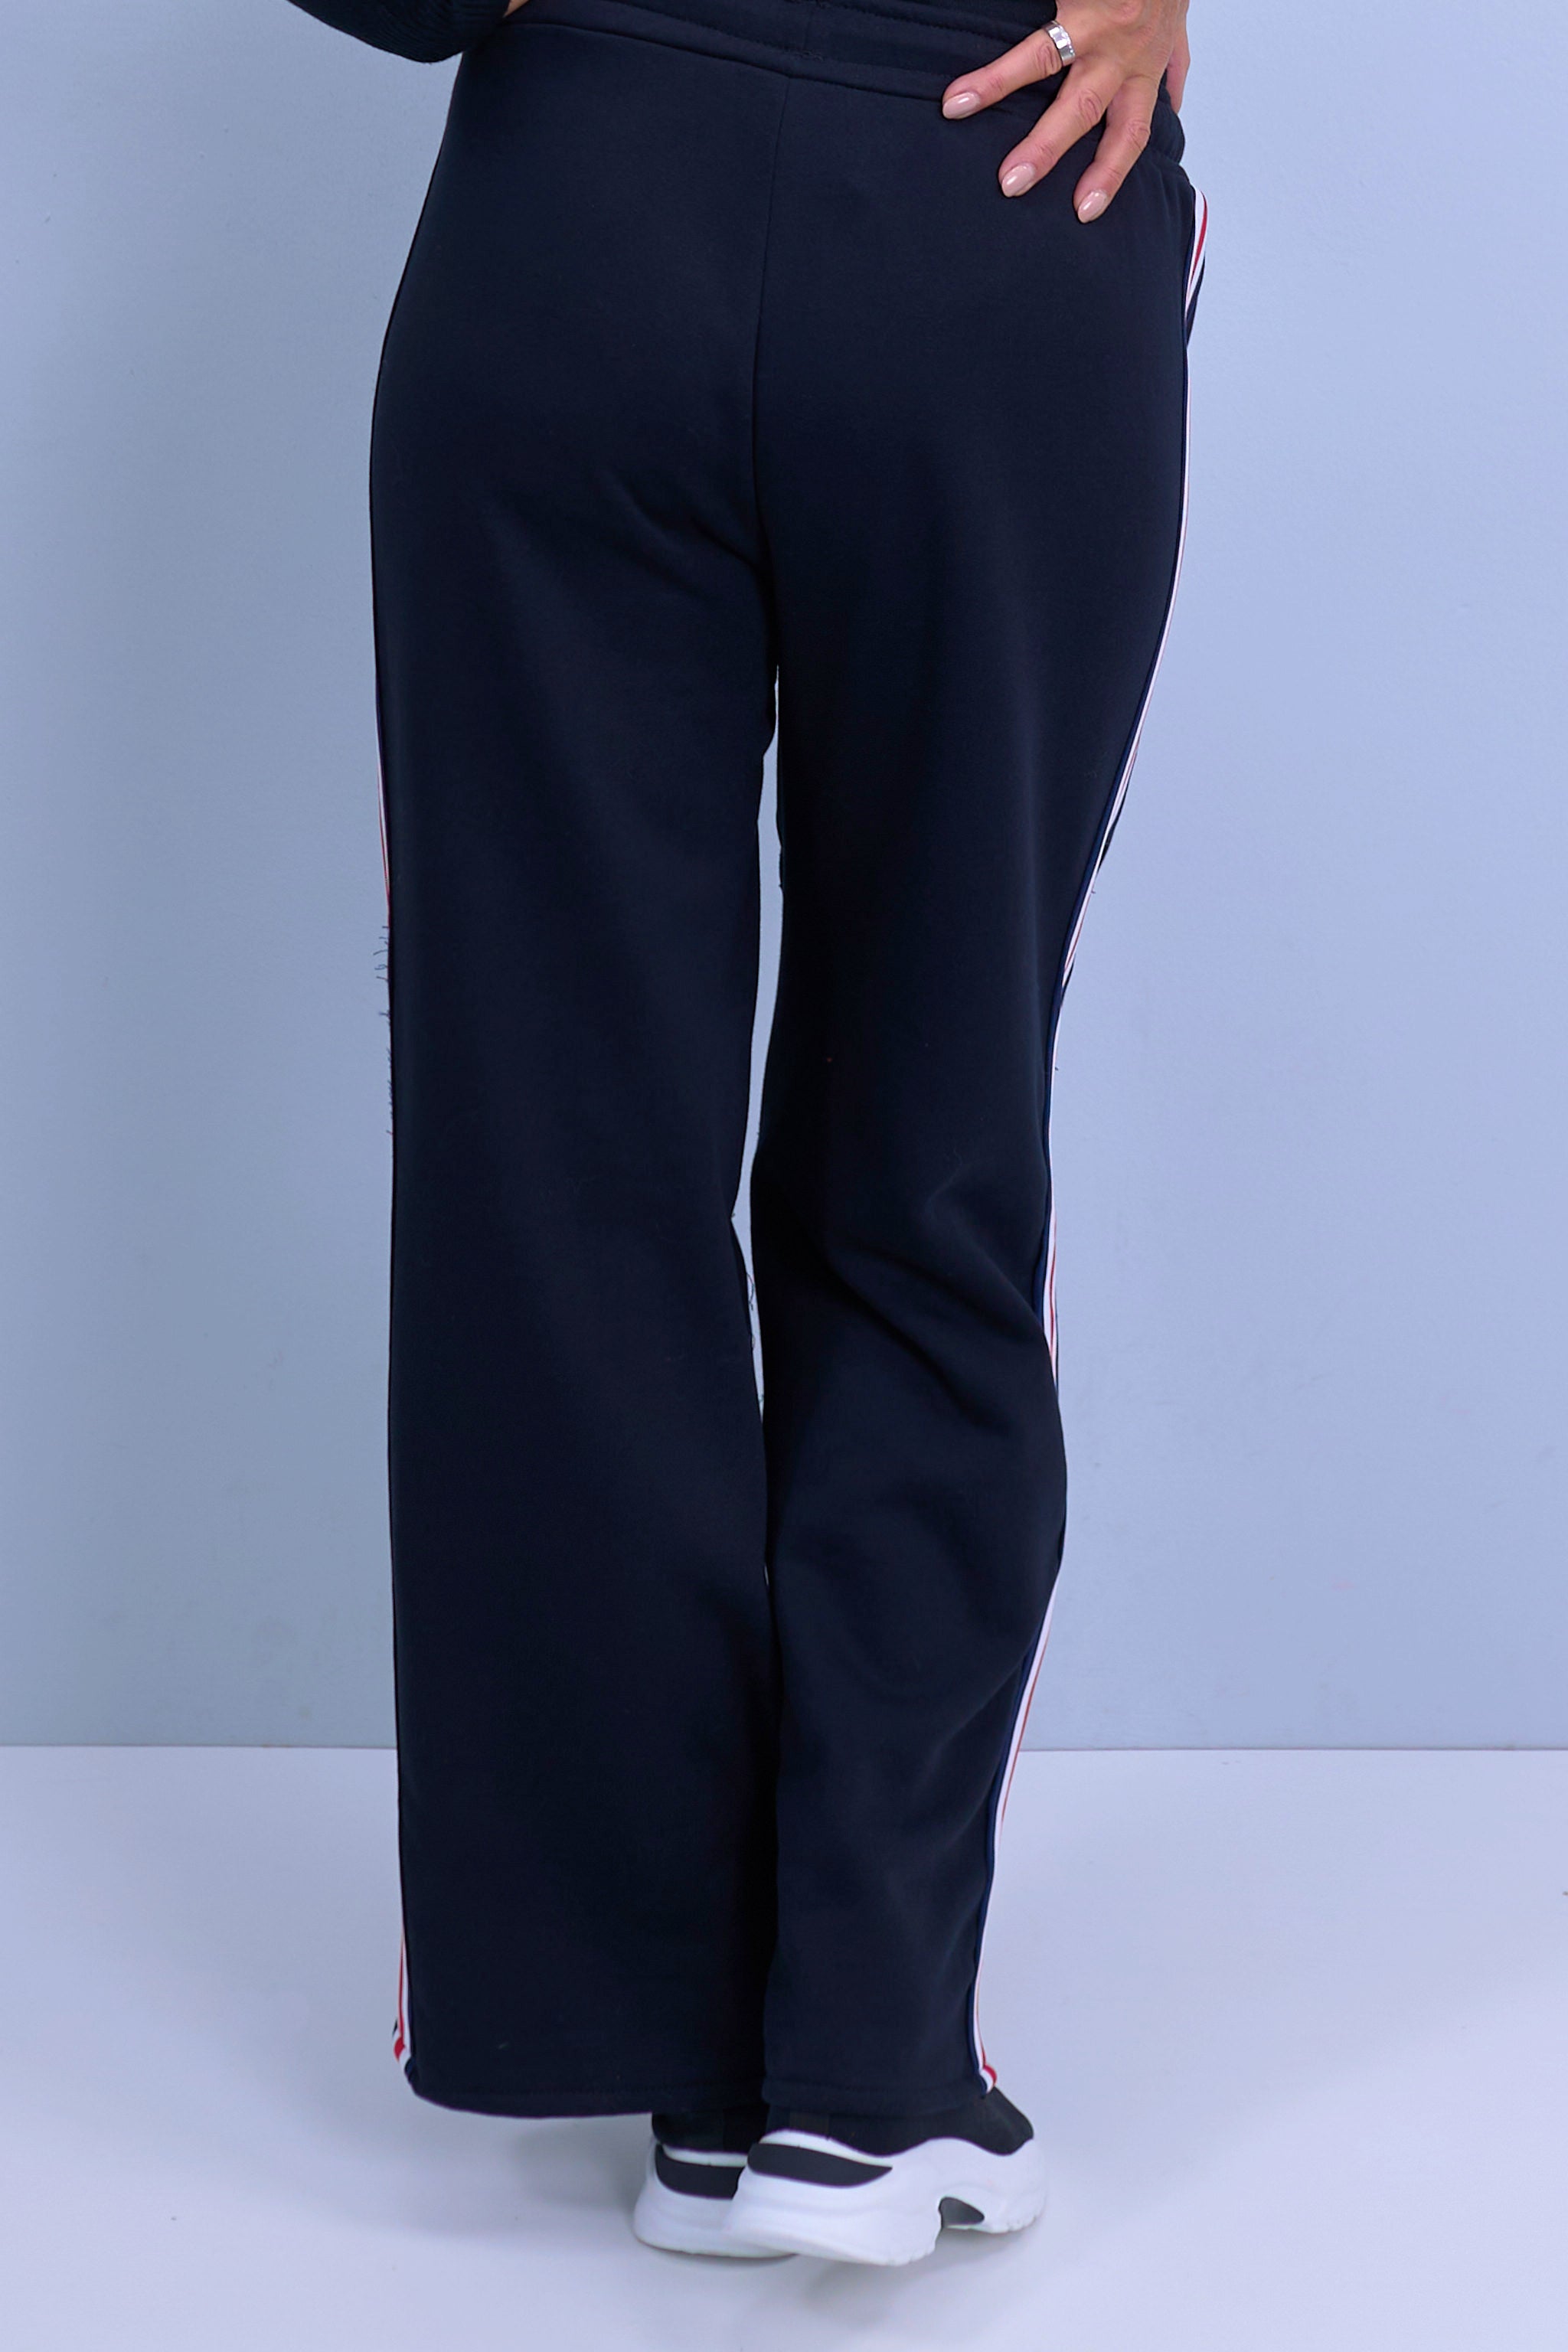 Sweatpants with jeans insert, black-denim blue